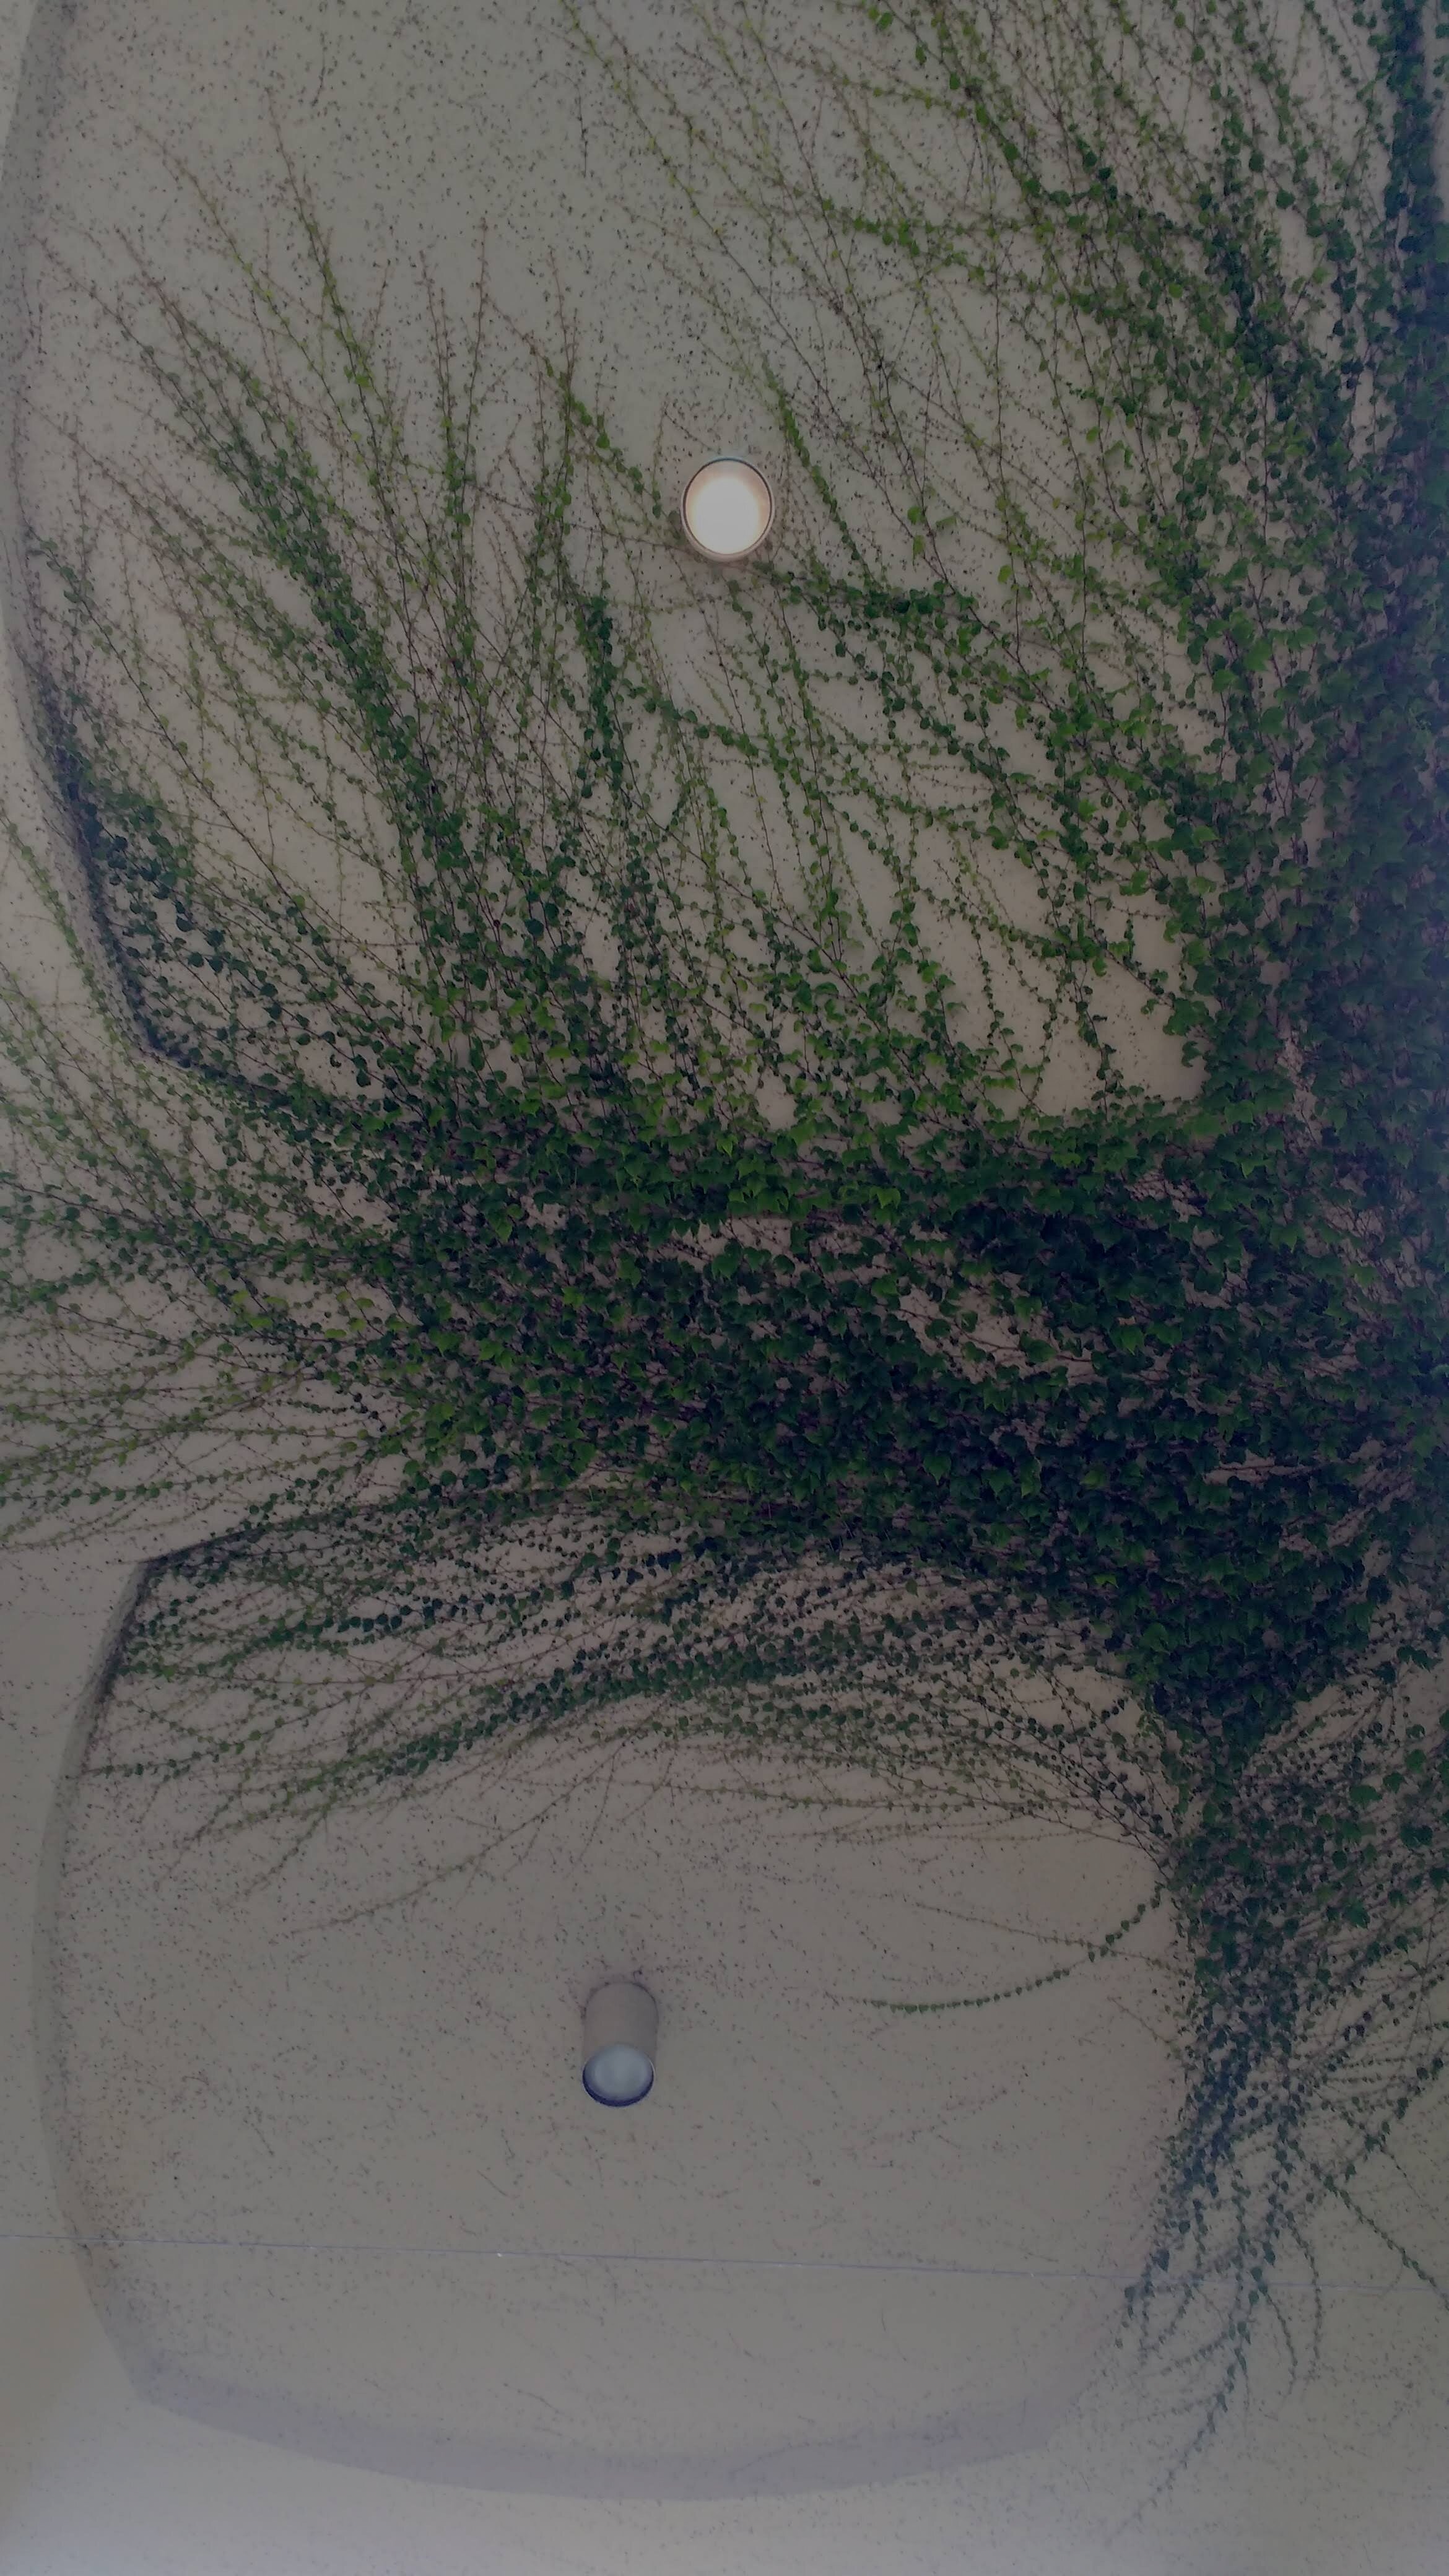 Kite Arner ivy growth.jpg